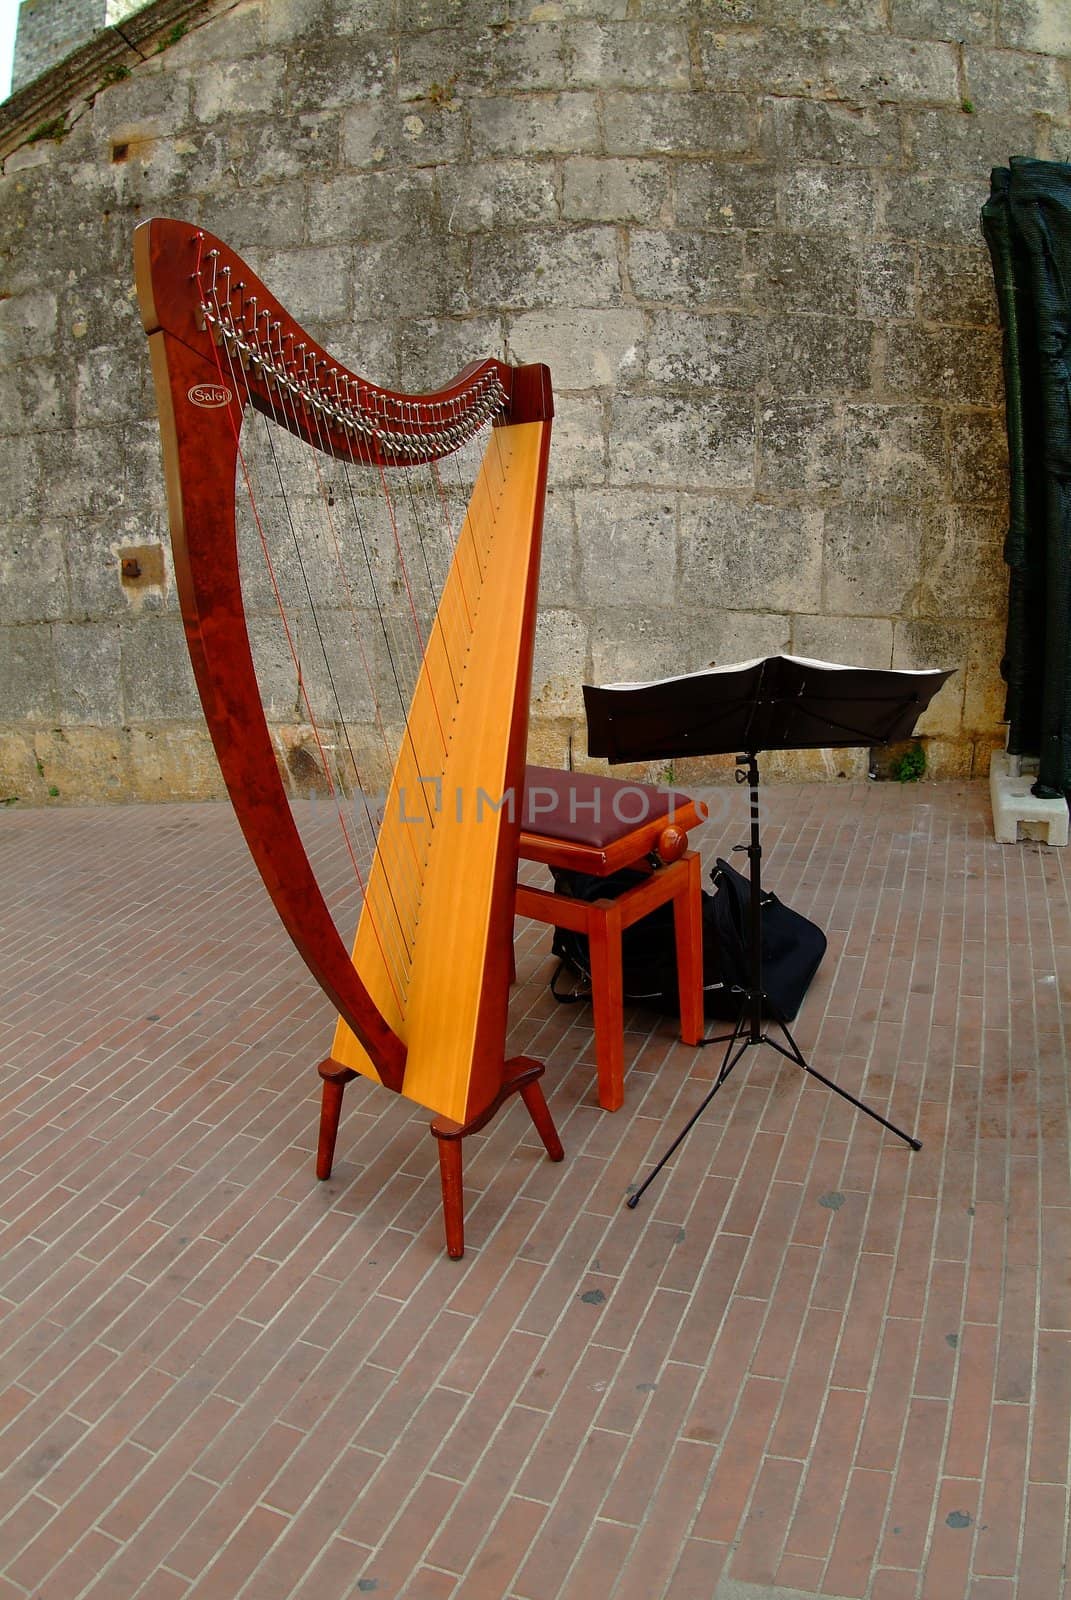 harfe | harp by fotofritz